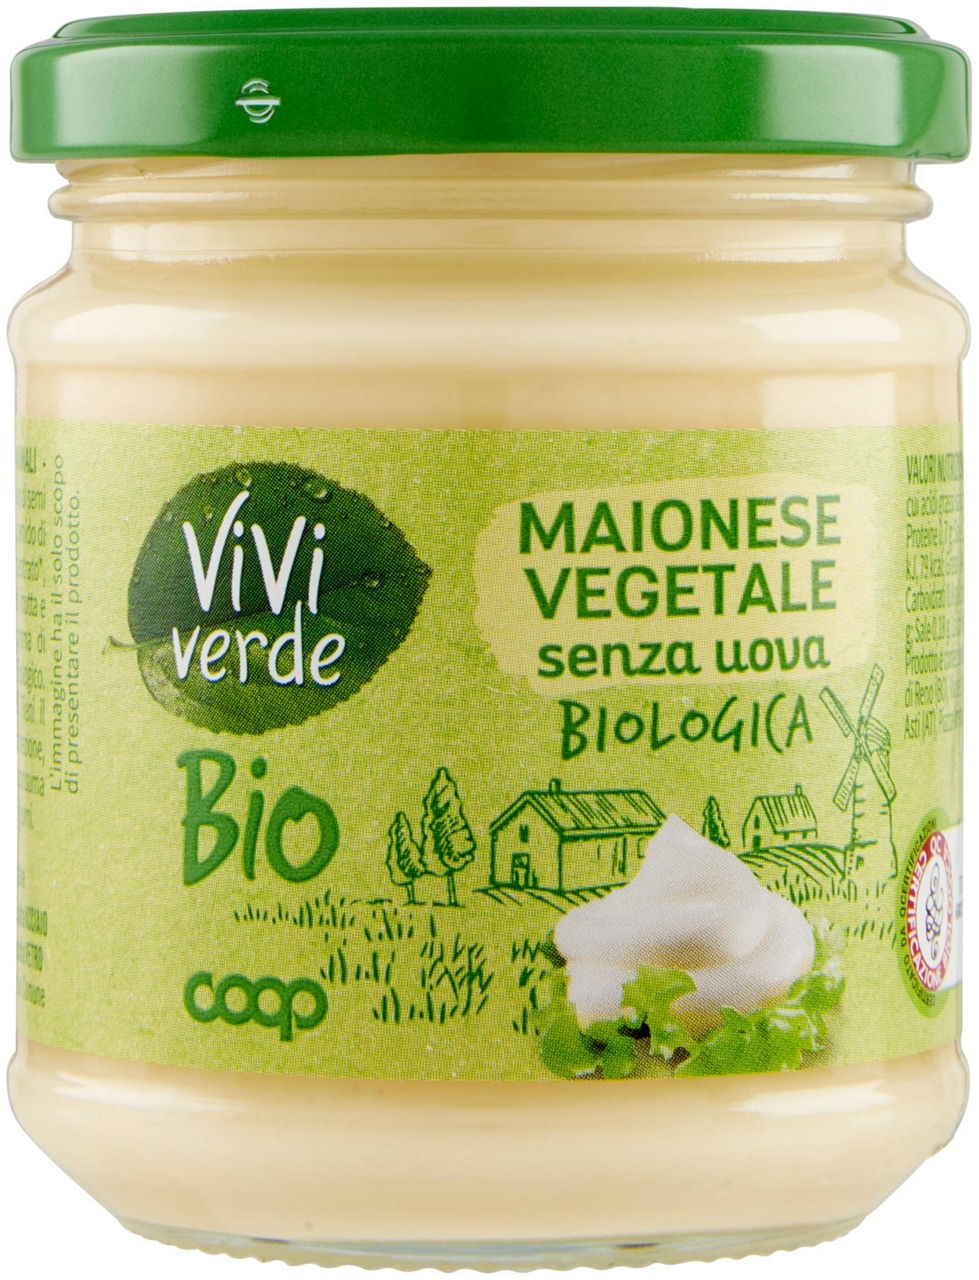 maionese senza uova Biologica Vivi Verde 180 g - 0